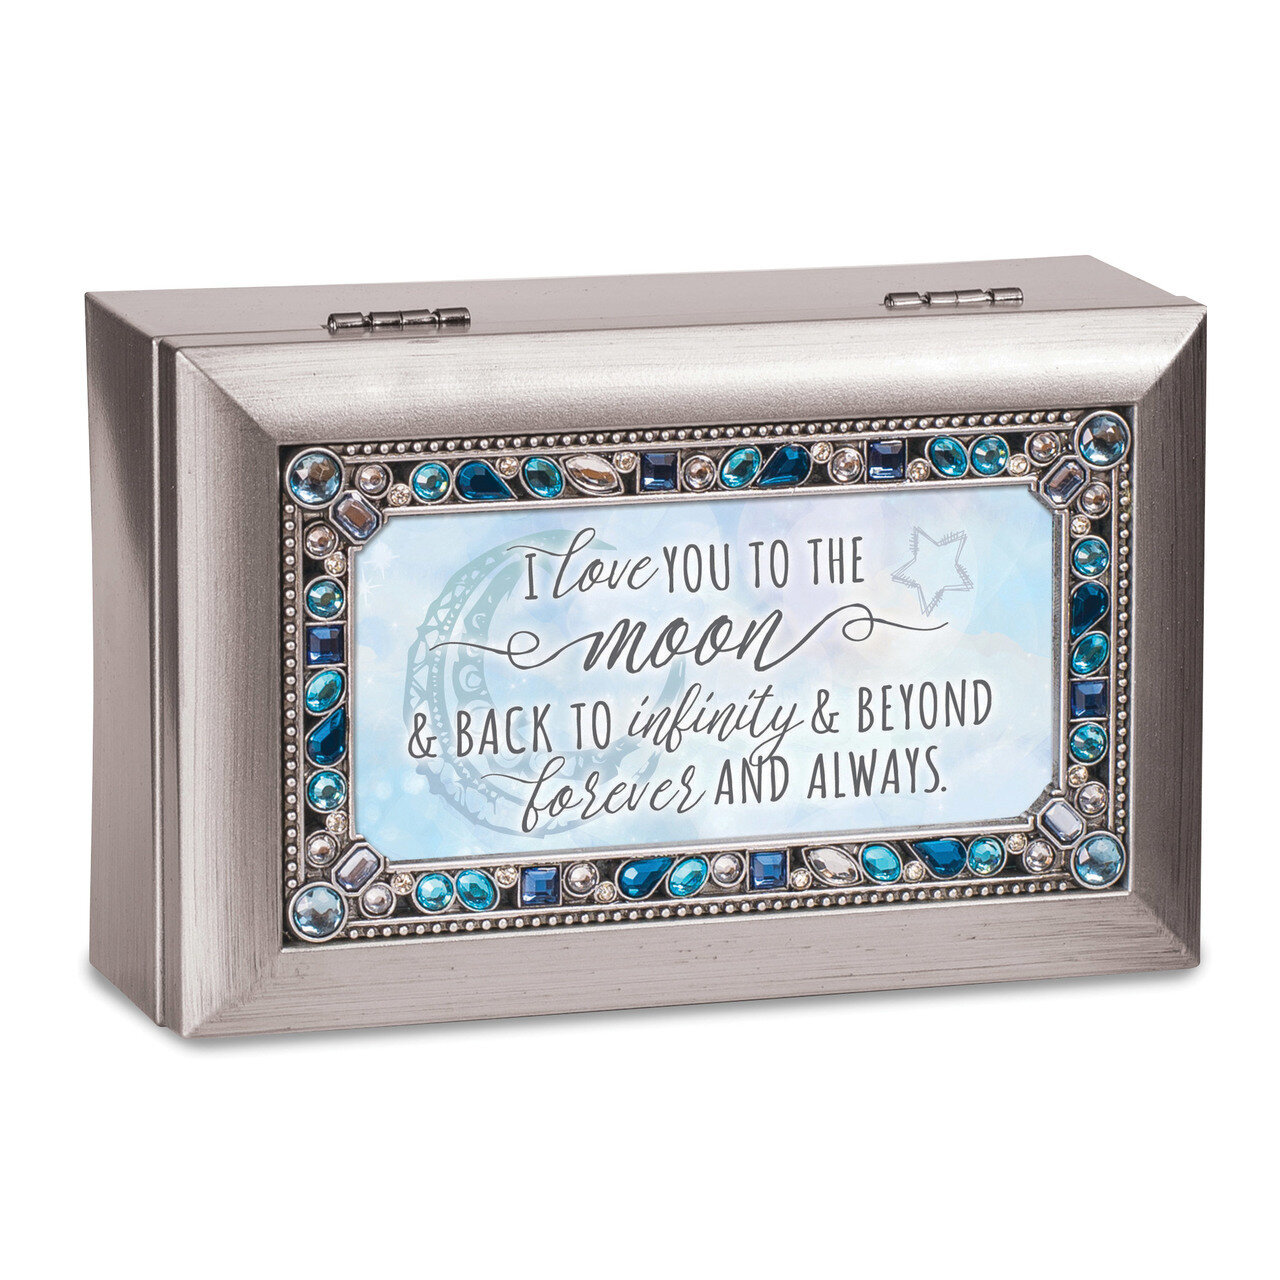 Resin Moon & Back Jeweled Music Box Silver-tone GM18626